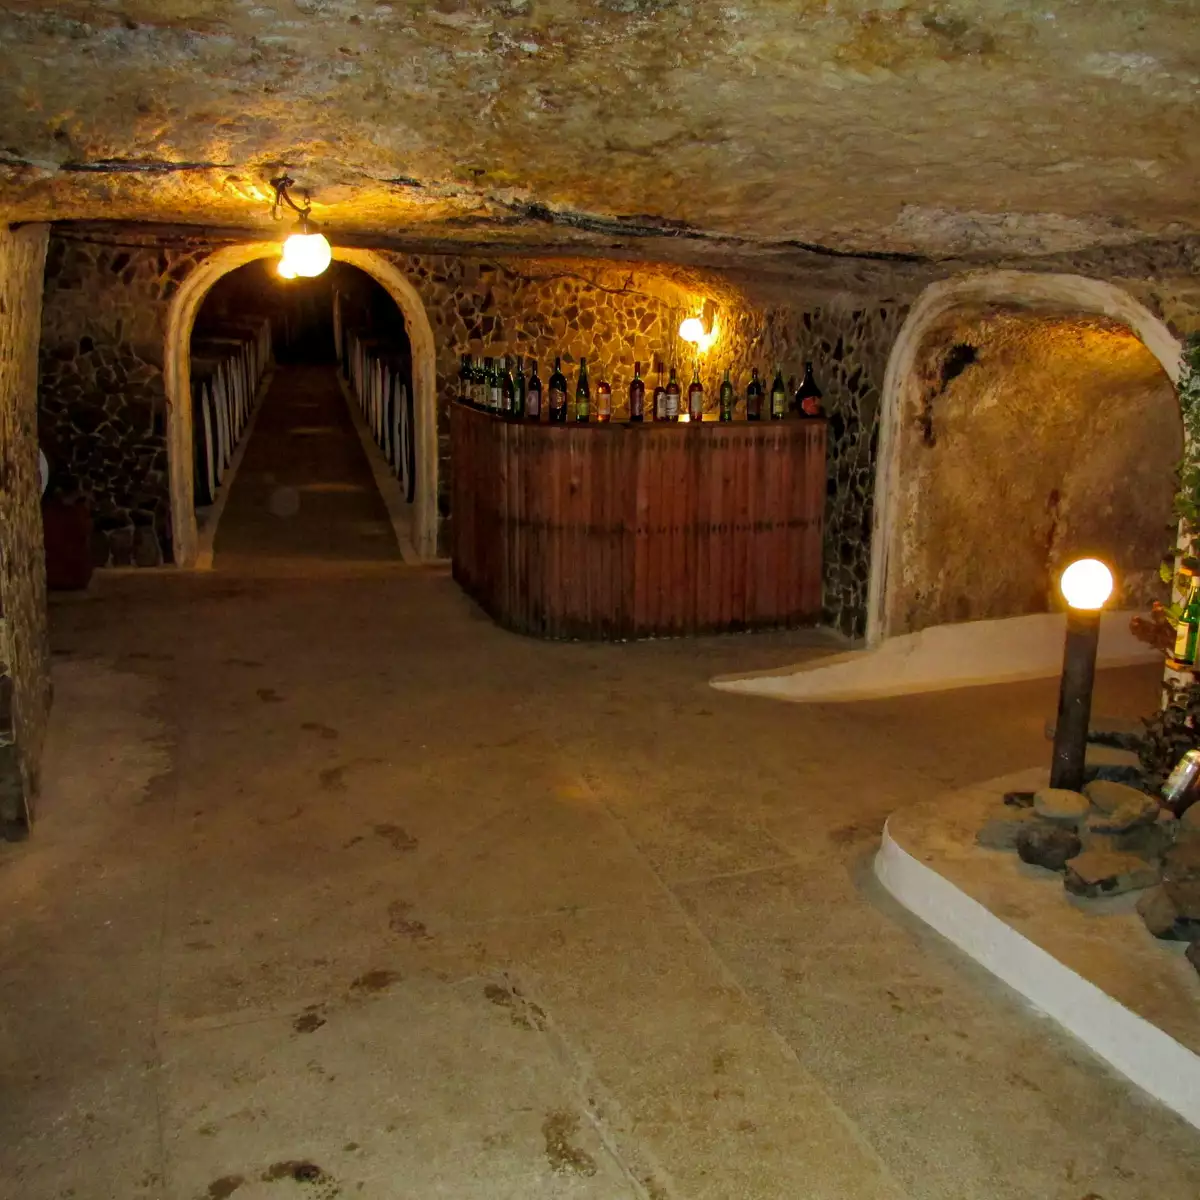 Srednyany wine cellars